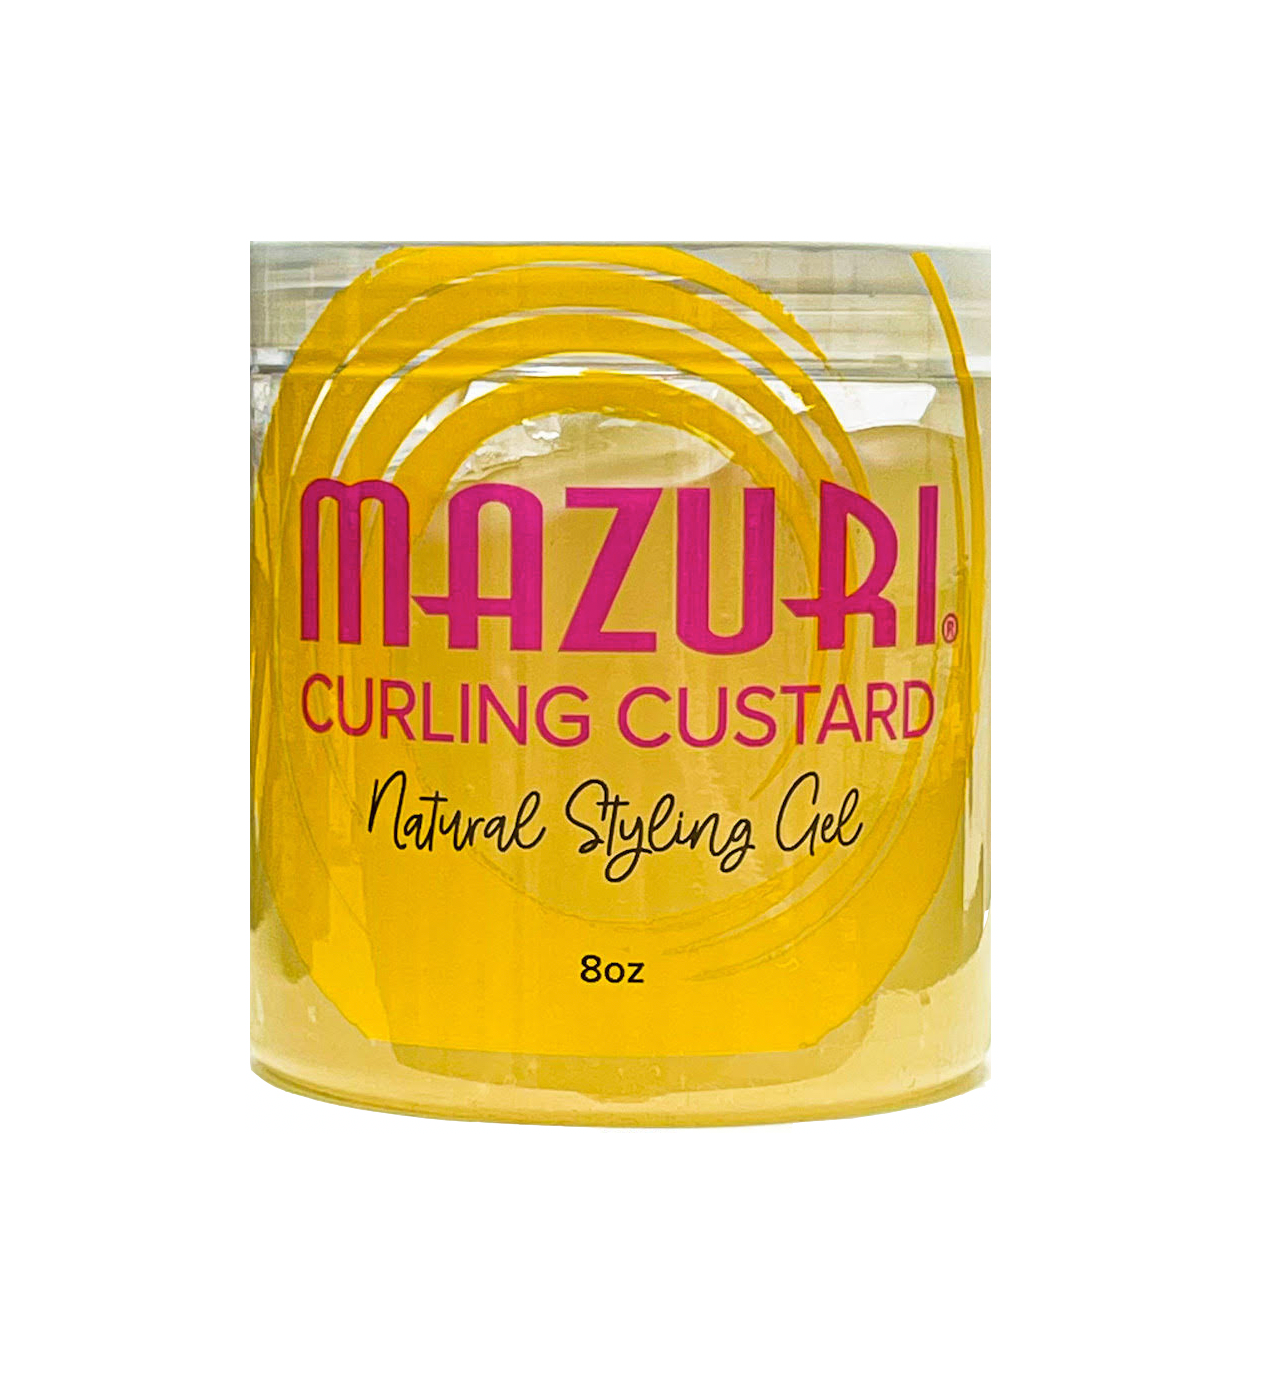 Mazuri - Curling Custard (Natural Styling Gel) 8oz